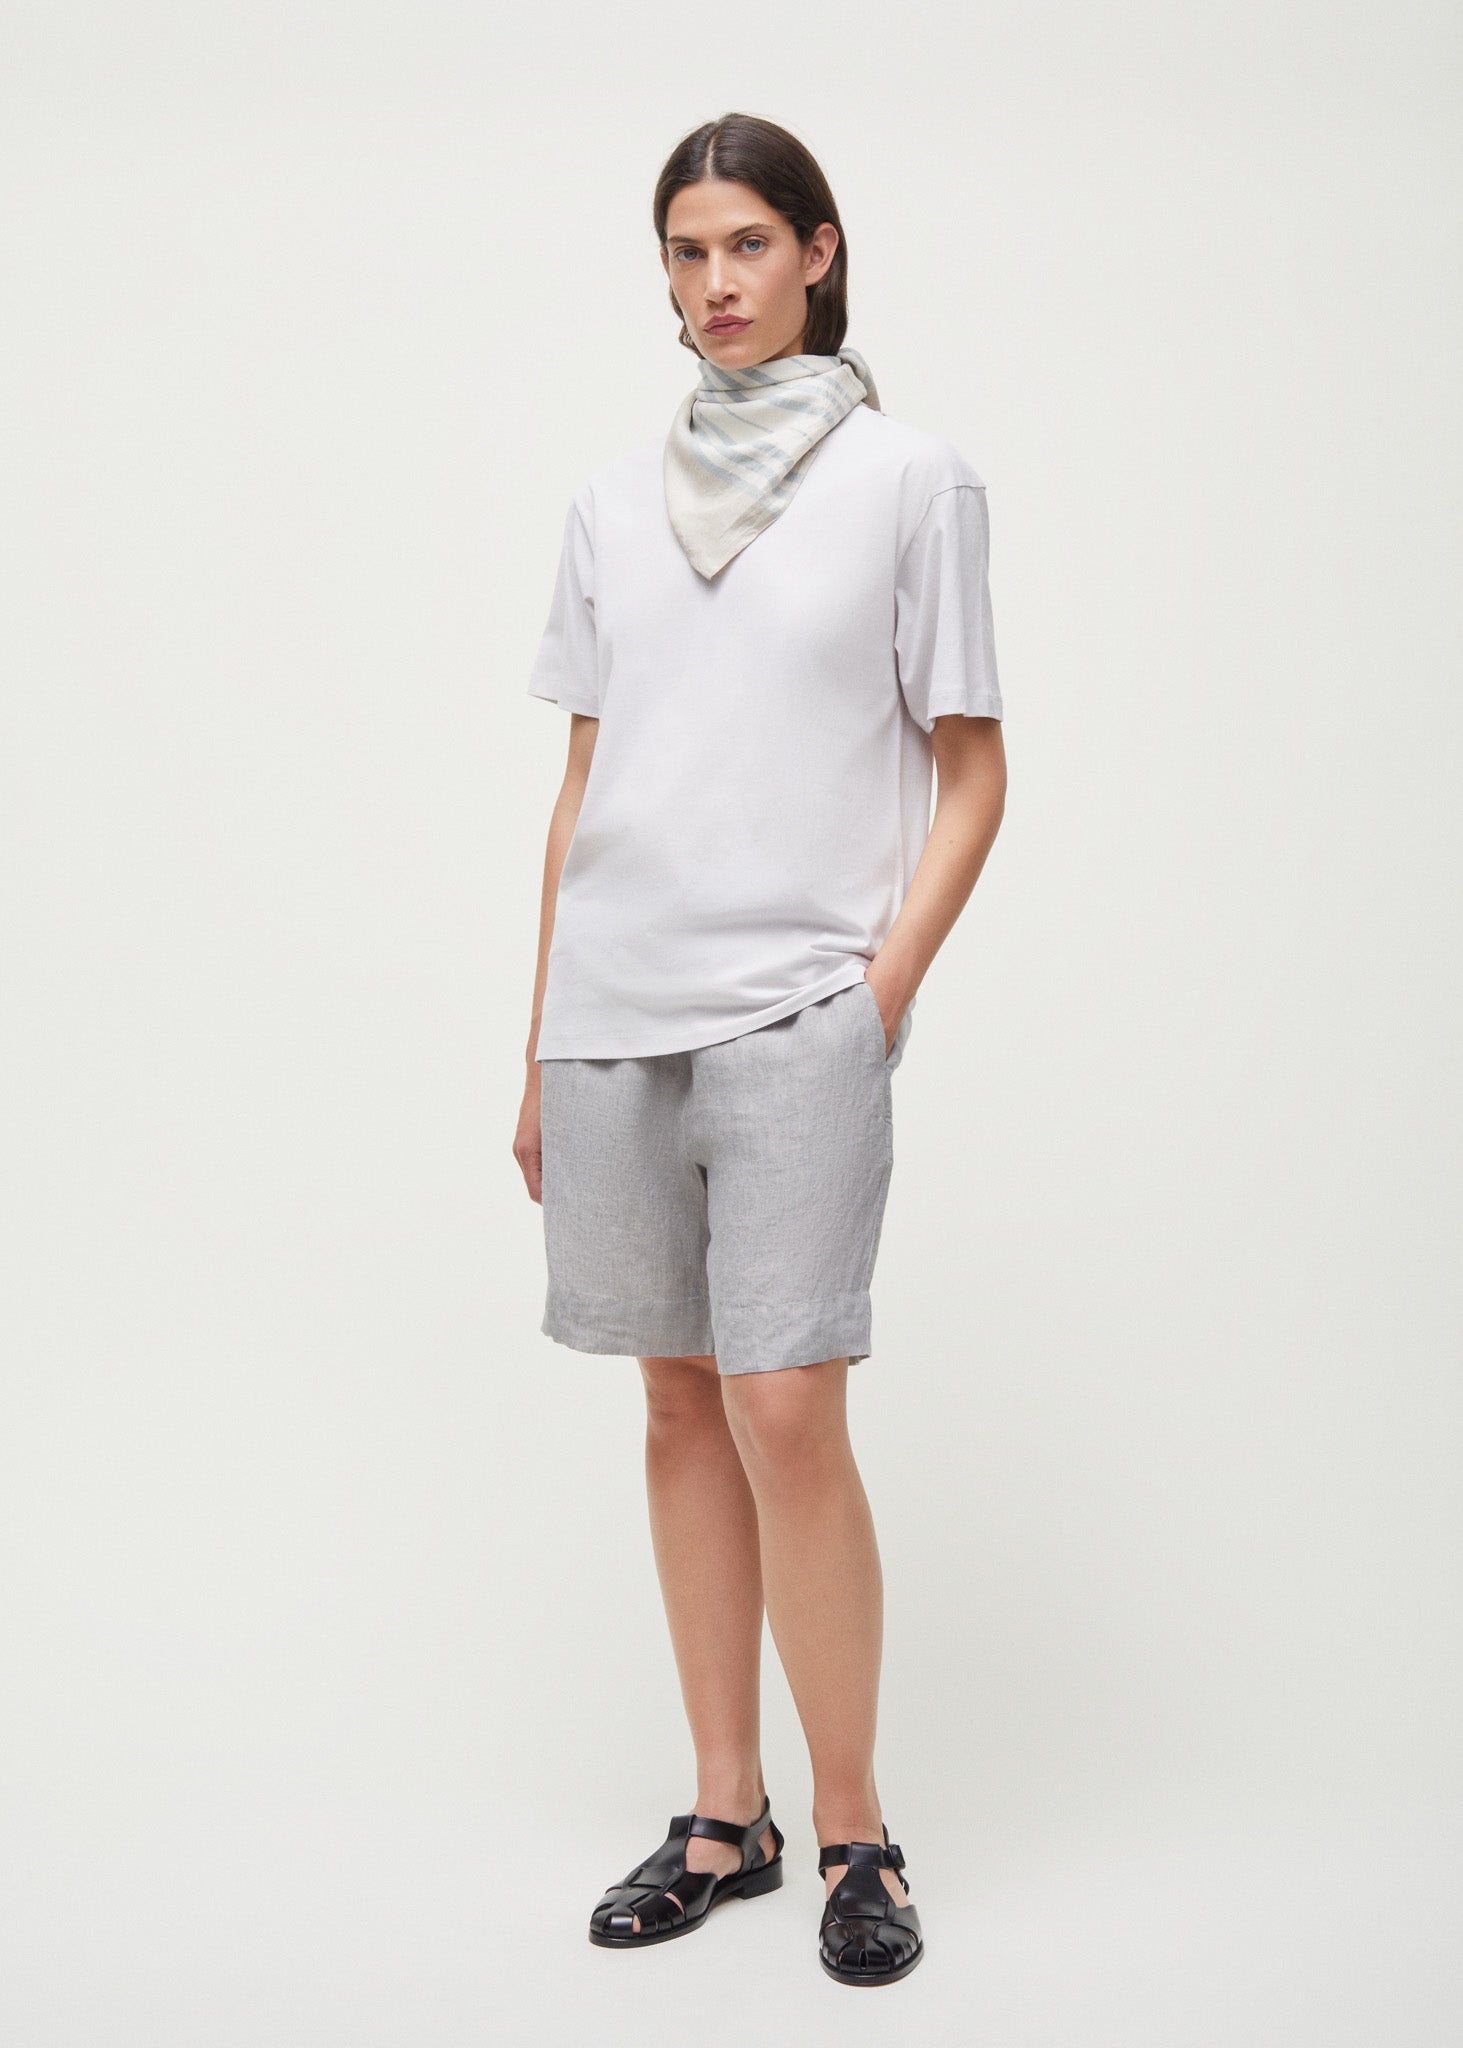 Shorts long linen | Grey